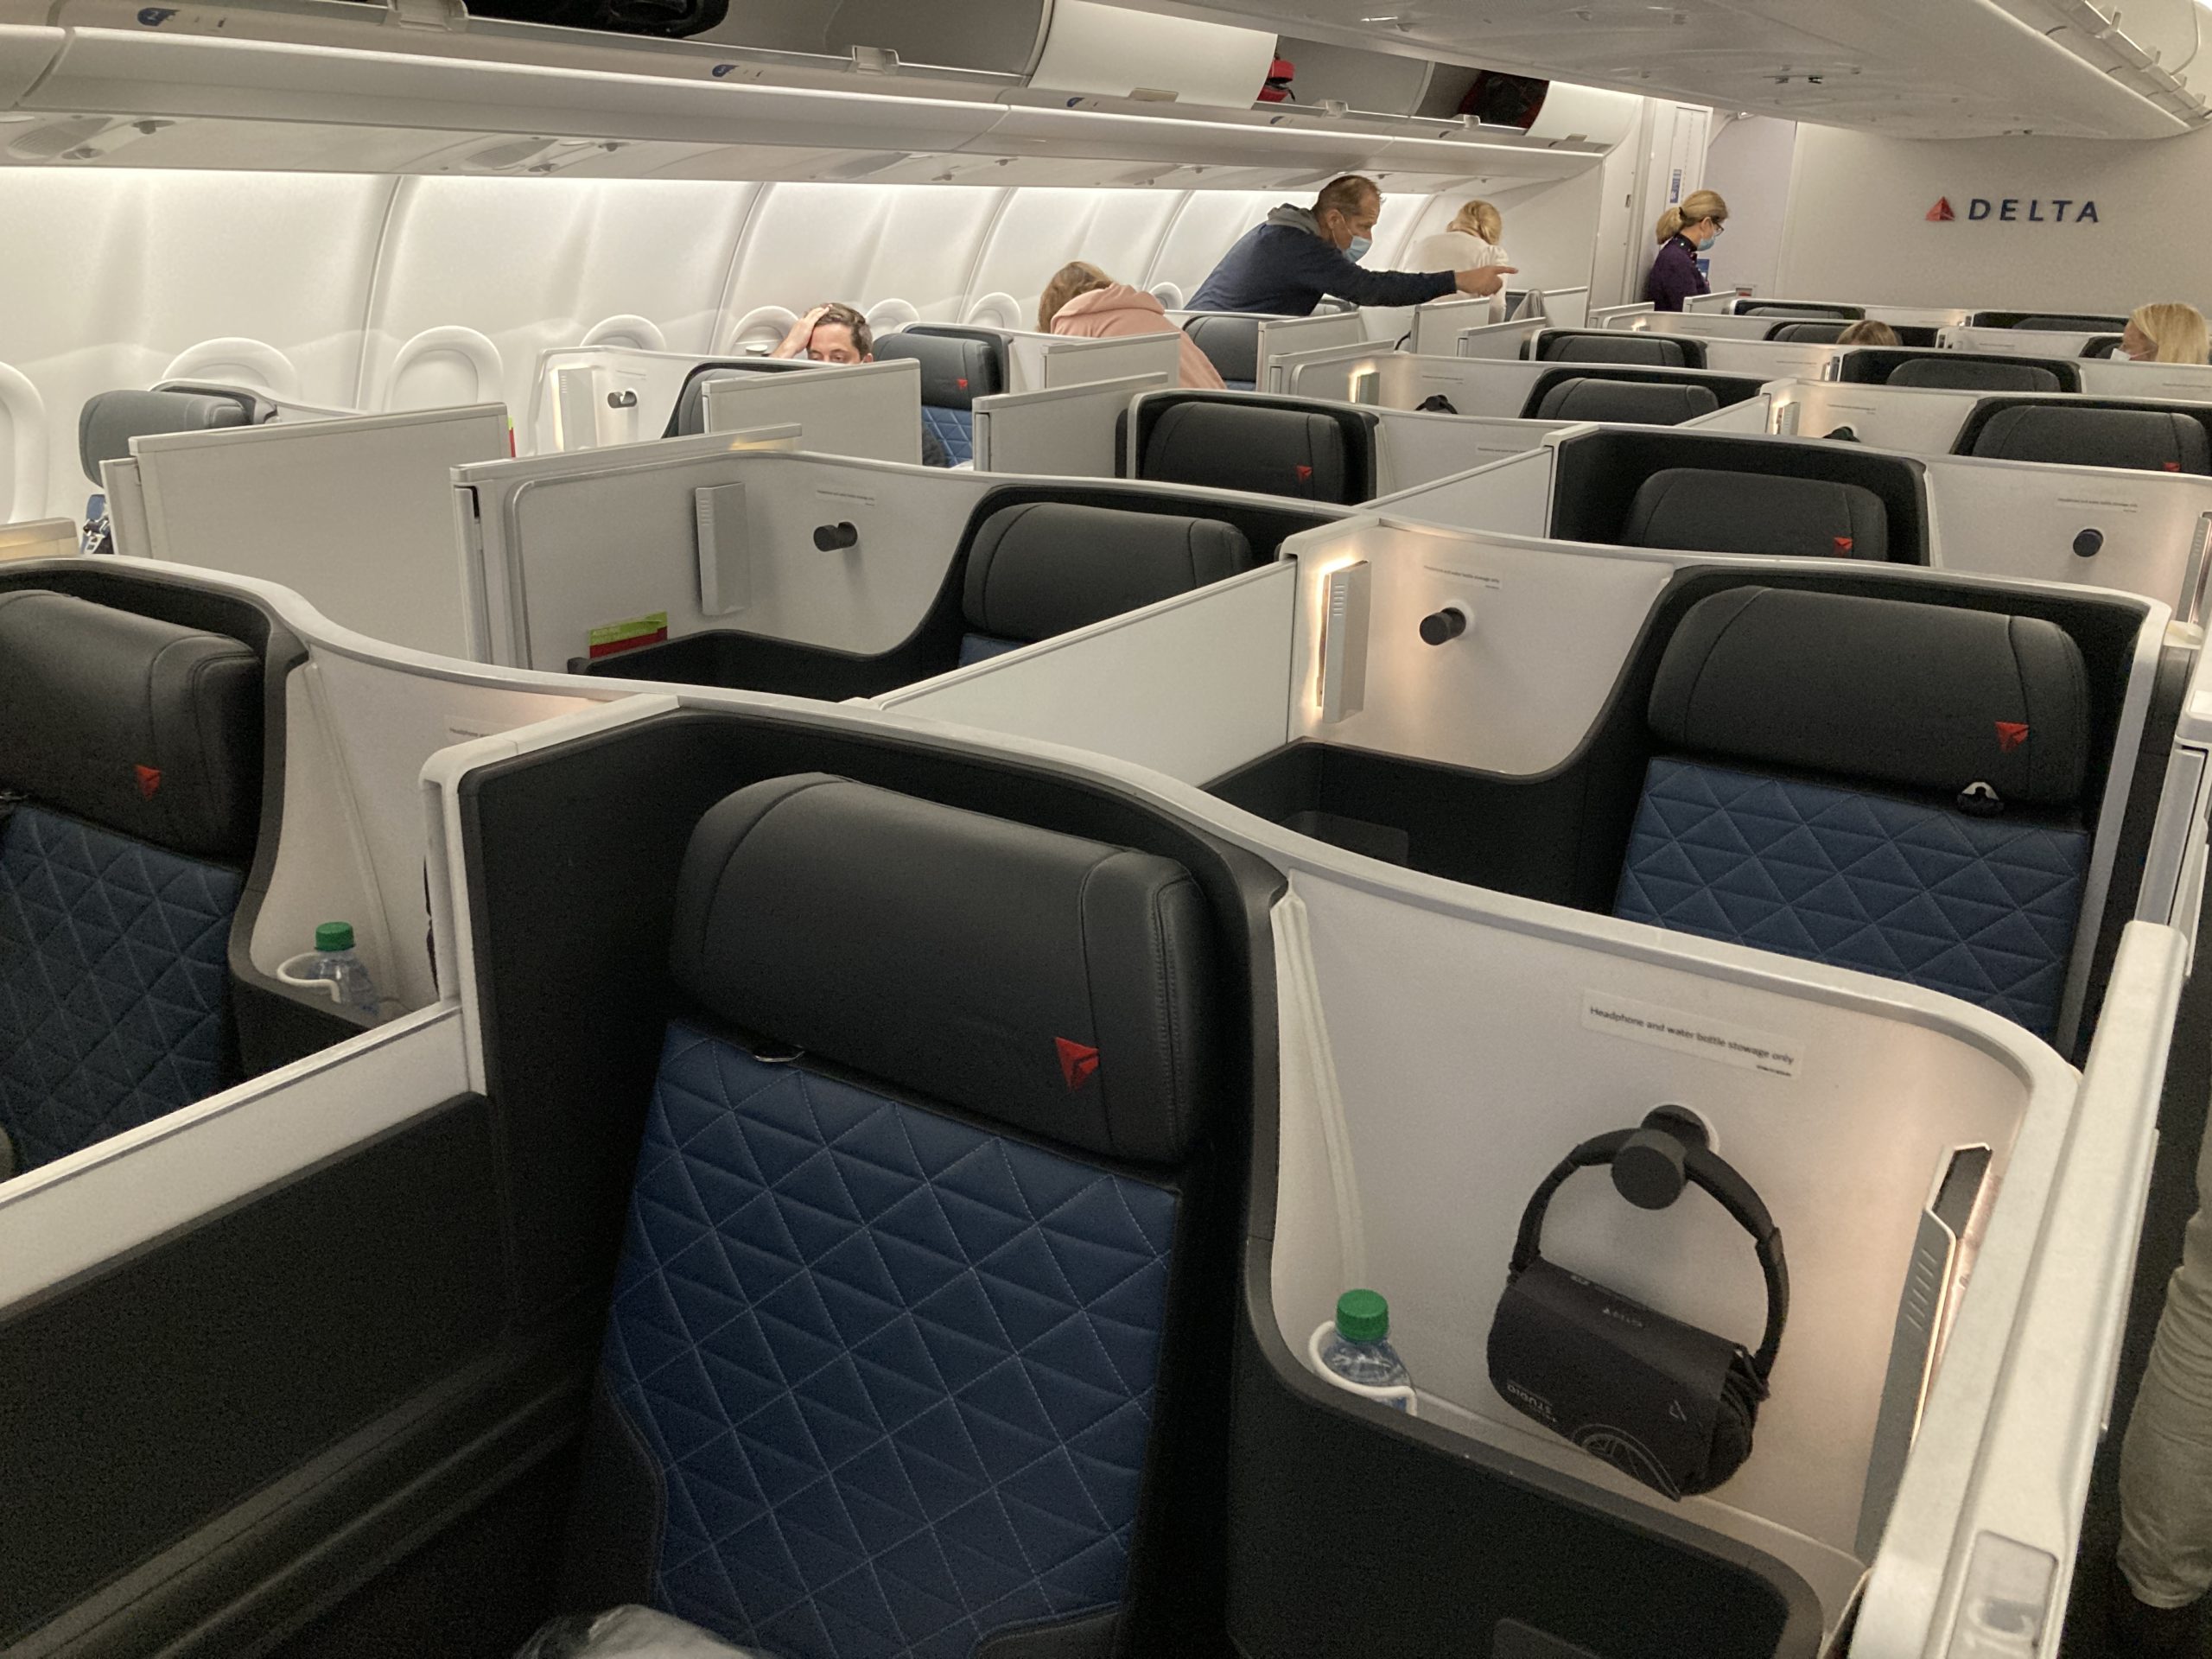 Review: Delta One Suites A330neo JFK-AMS